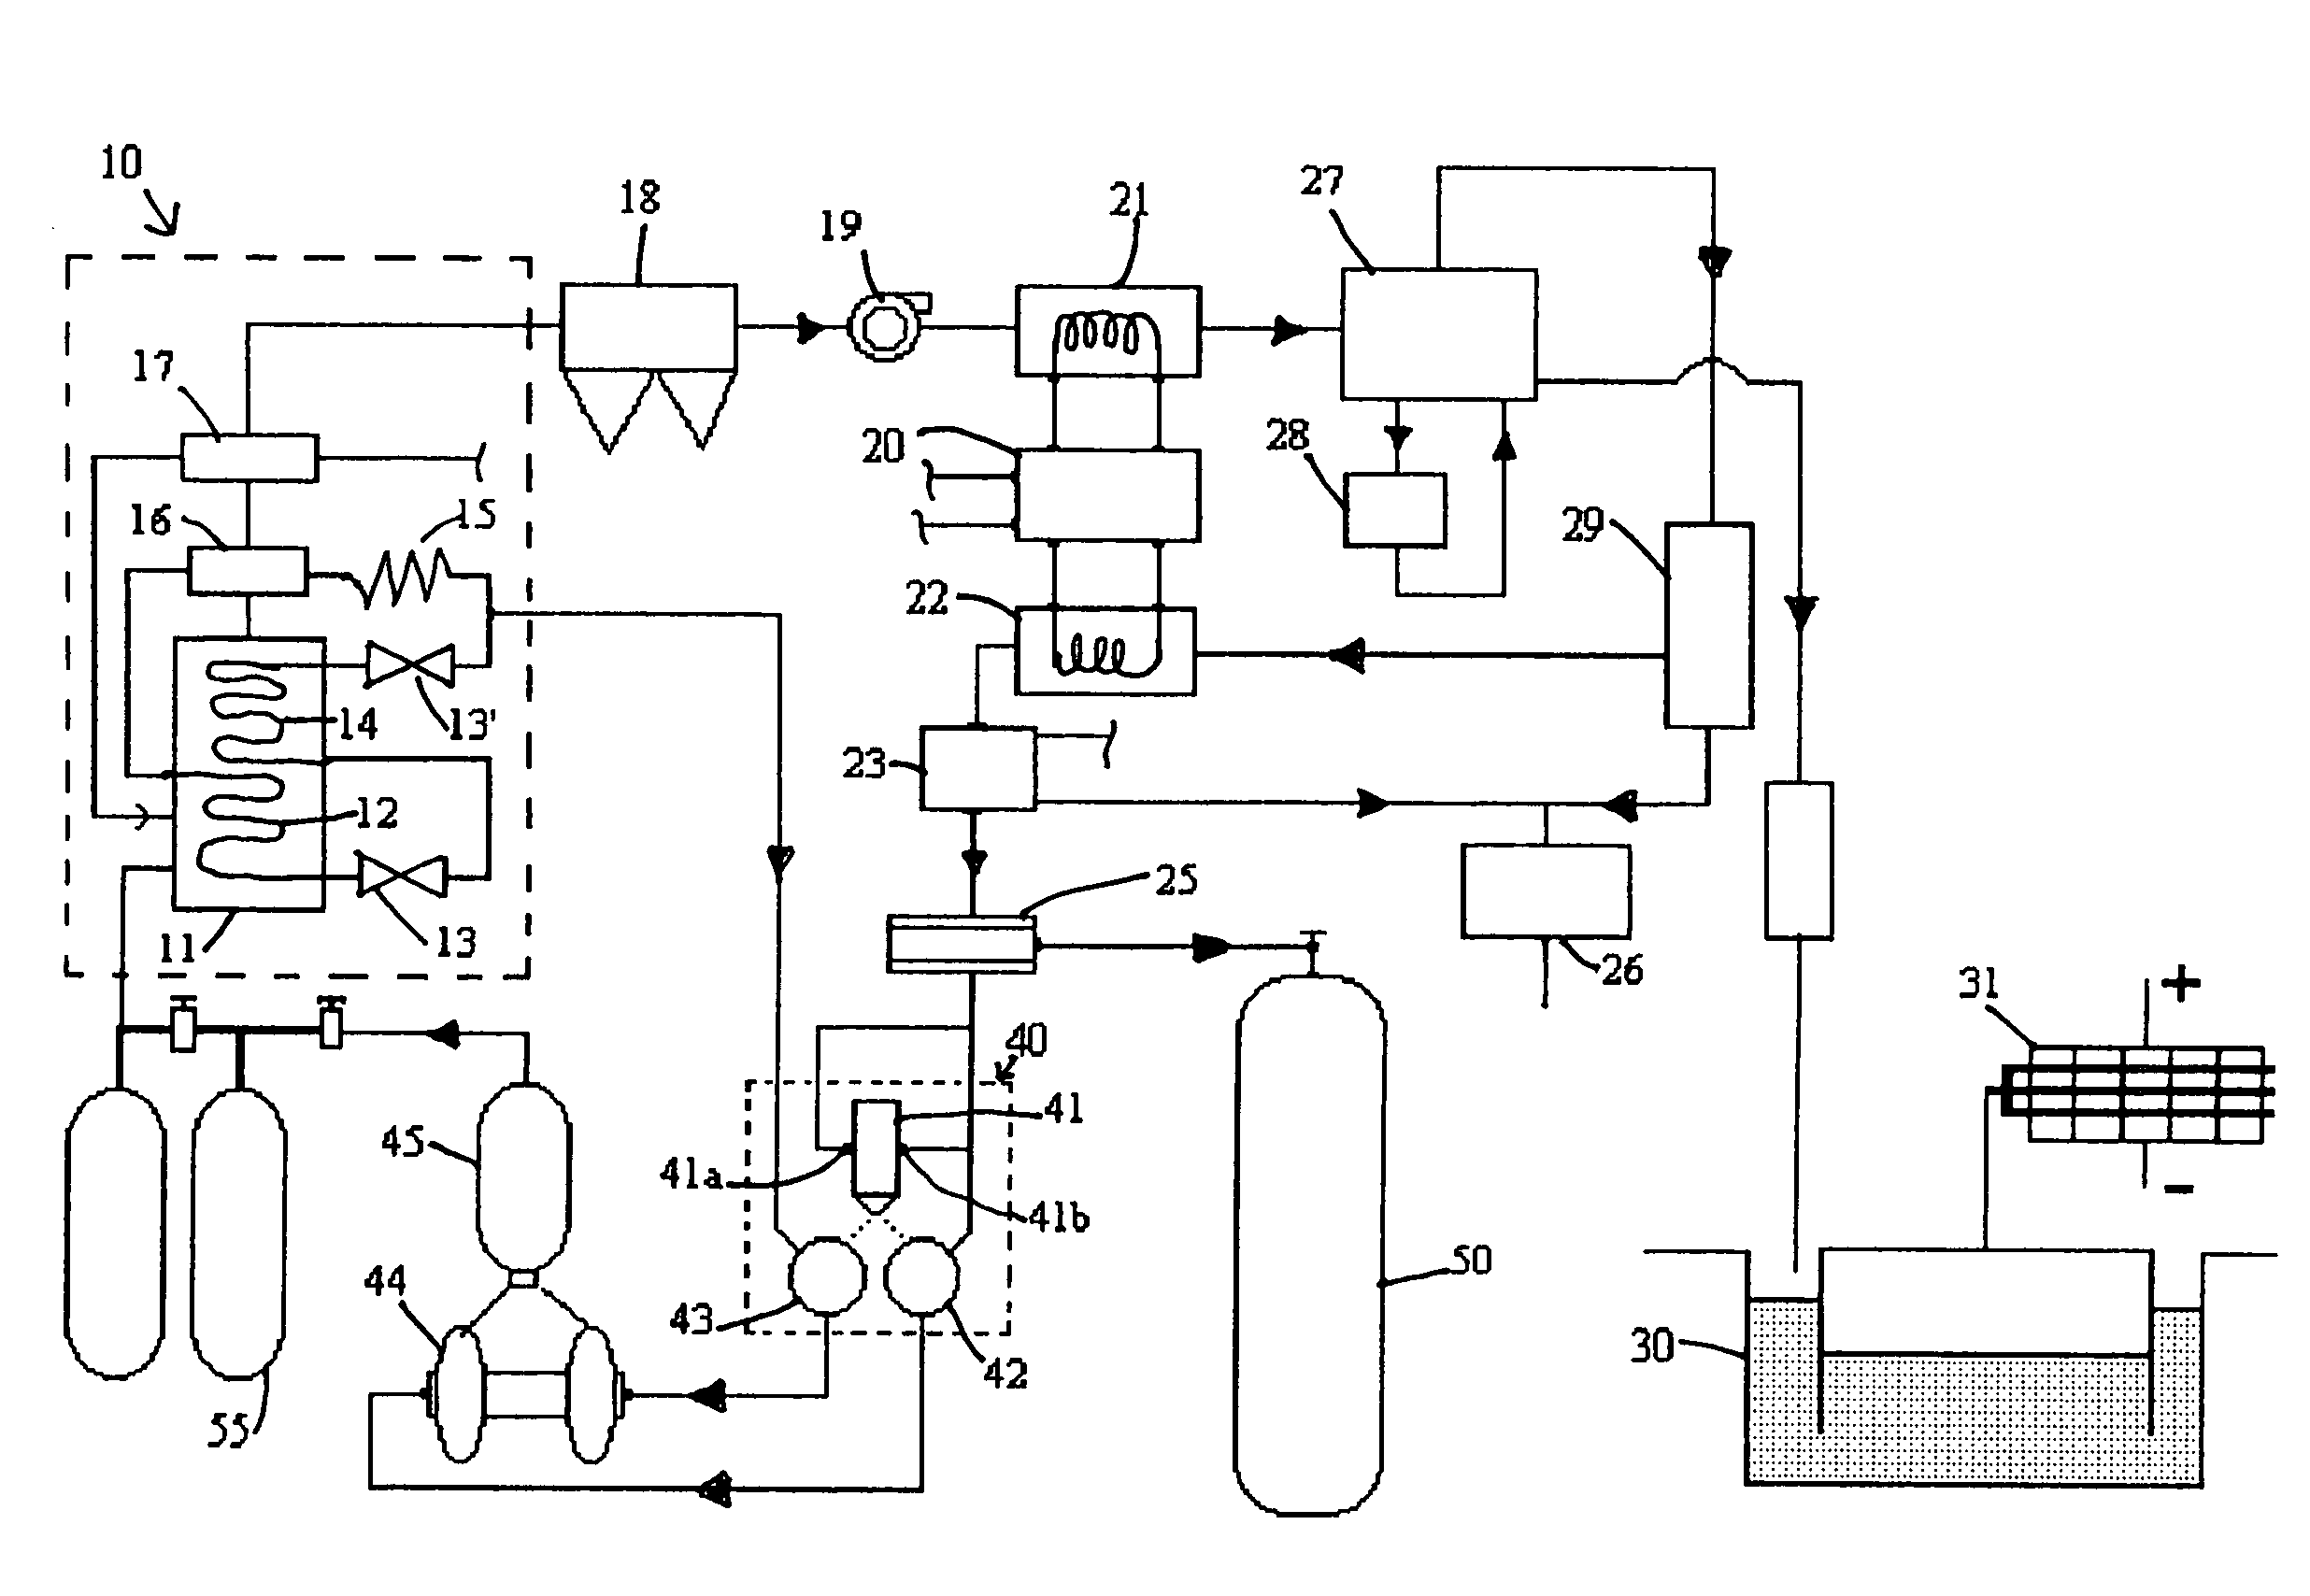 Flue gas conversion apparatus and method